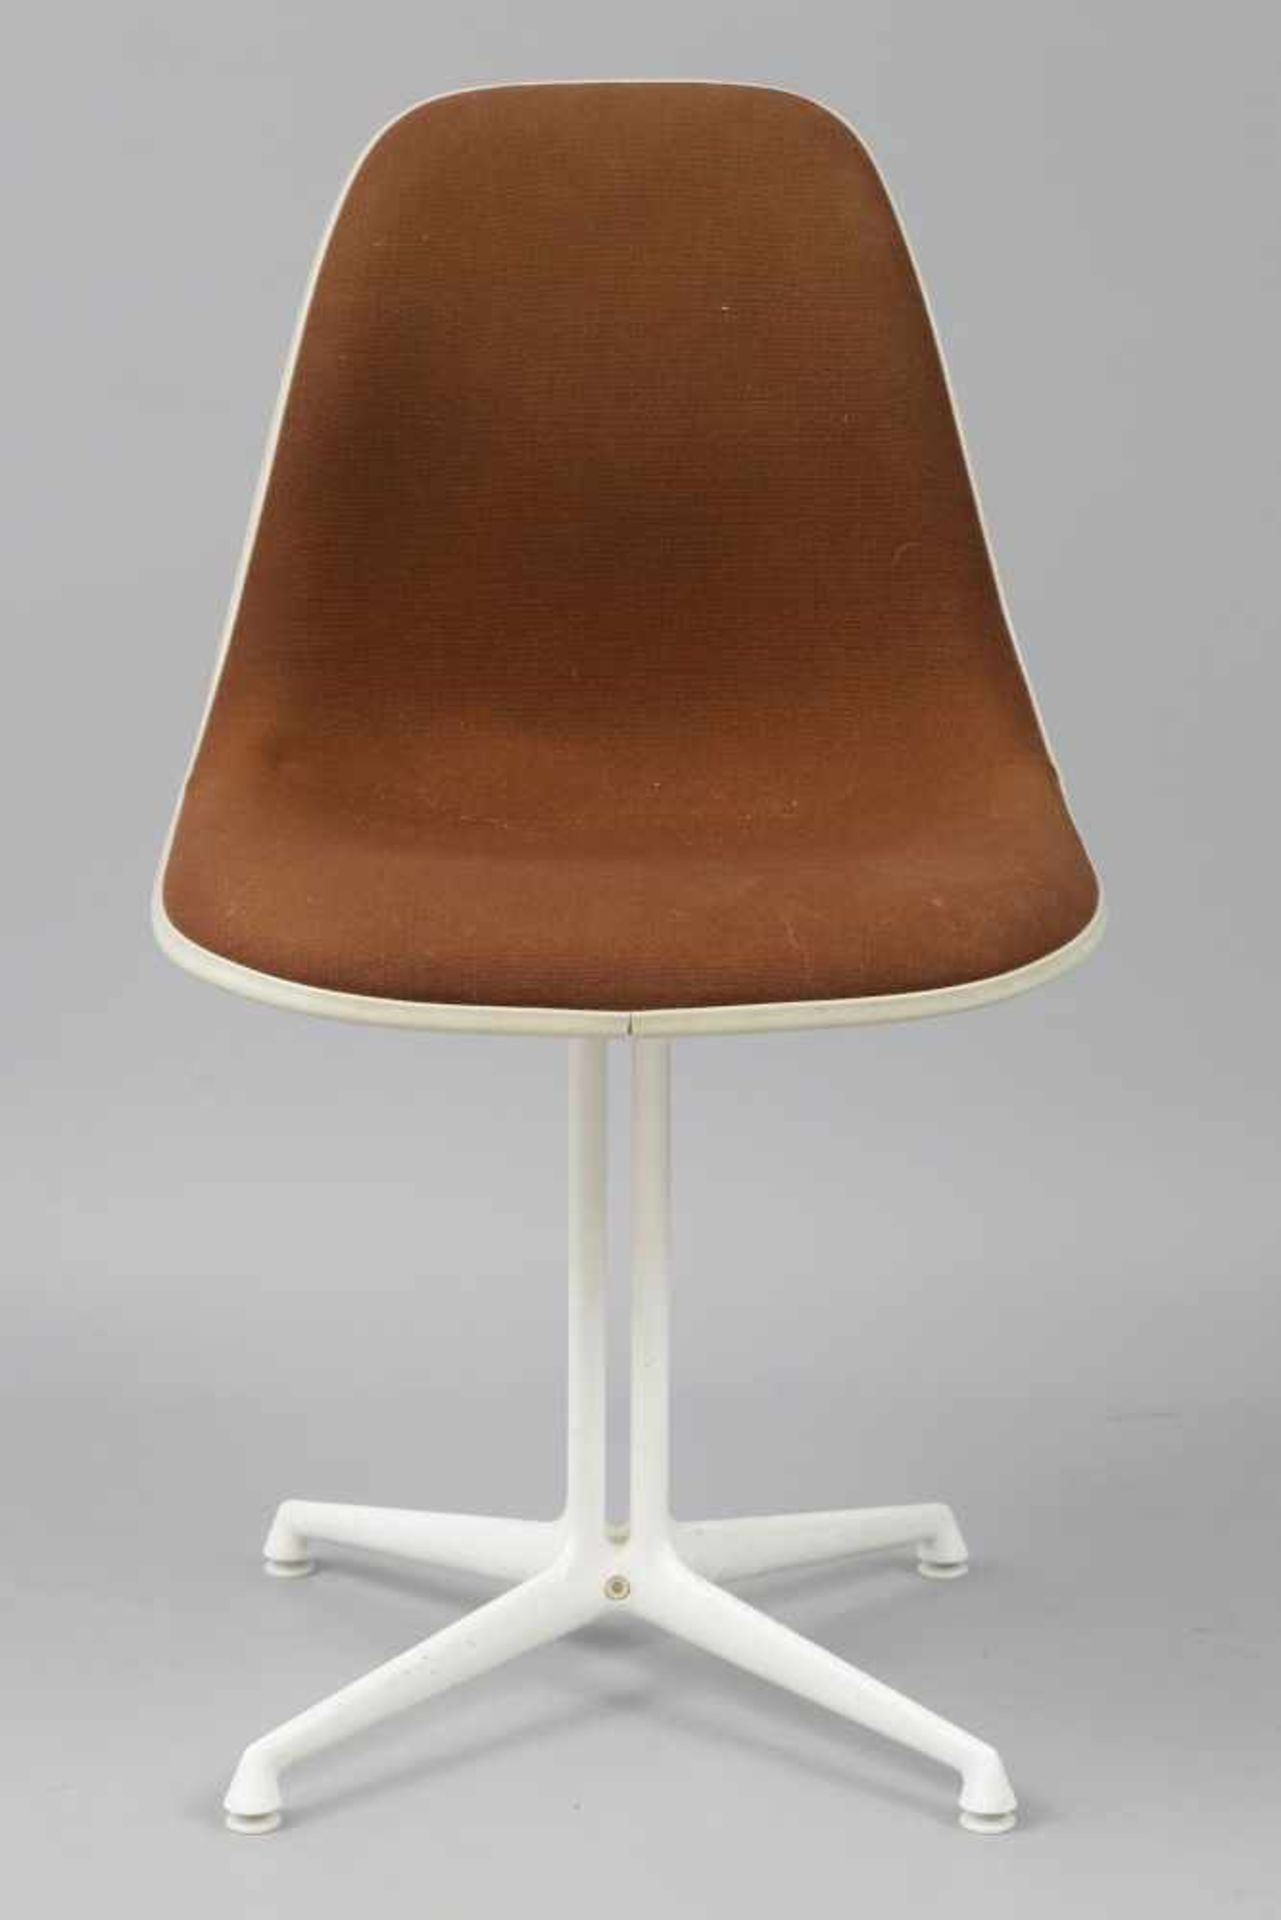 CHARLES EAMES ¨Plastic Side Chair¨Ausführung HERMAN MILLER, USA, um 1975, helle Fiberglas-Sitzschale - Bild 2 aus 3